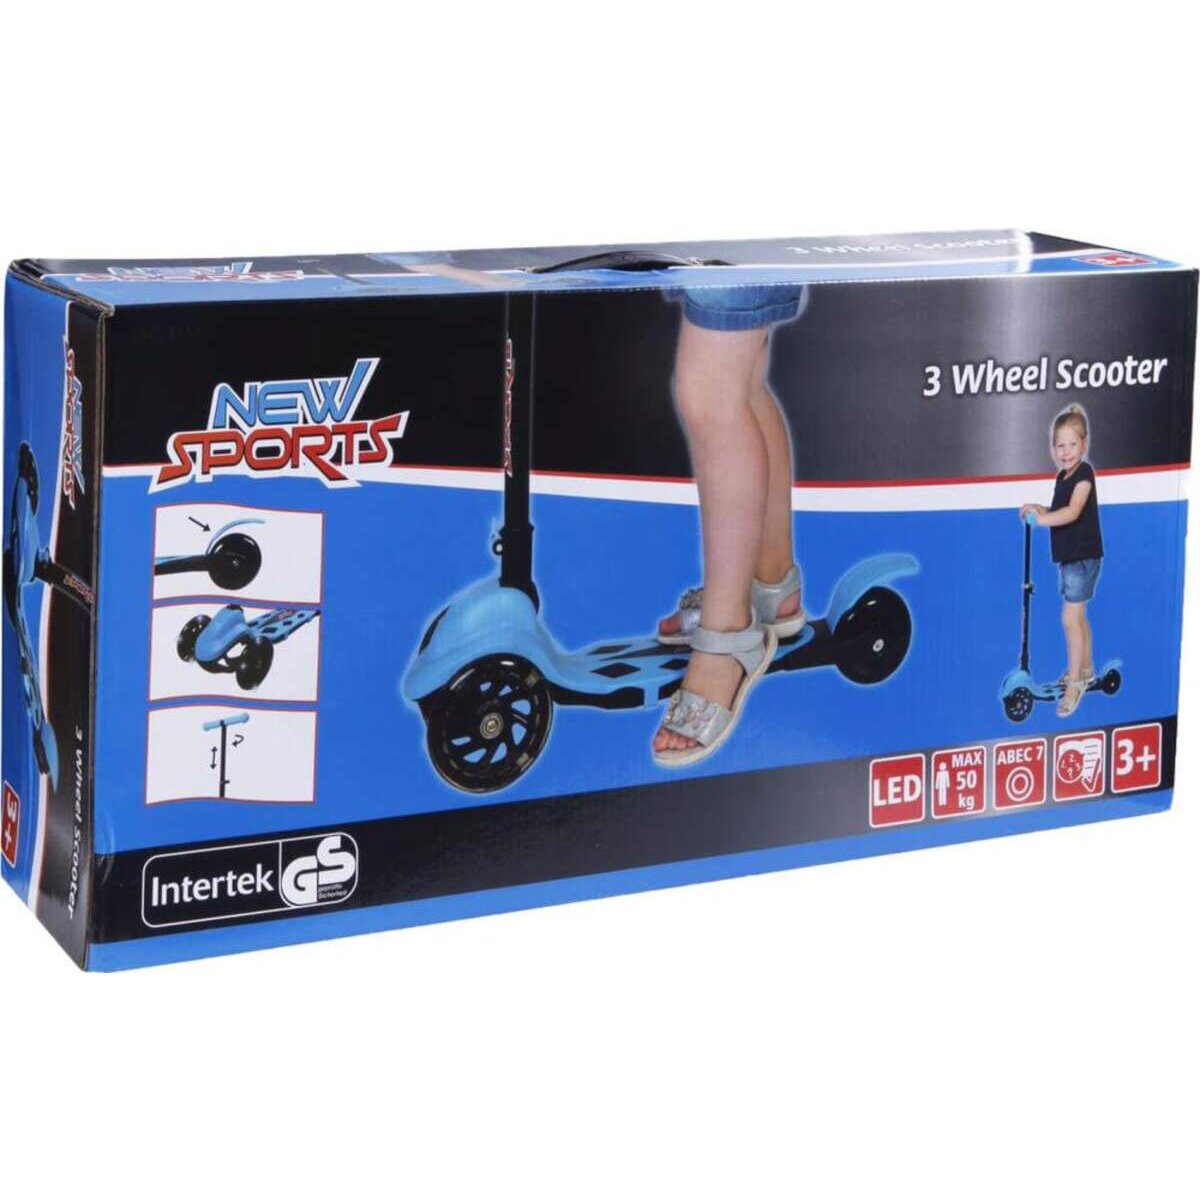 New Sports 3-Wheel Scooter Blau, klappbar, 110 mm